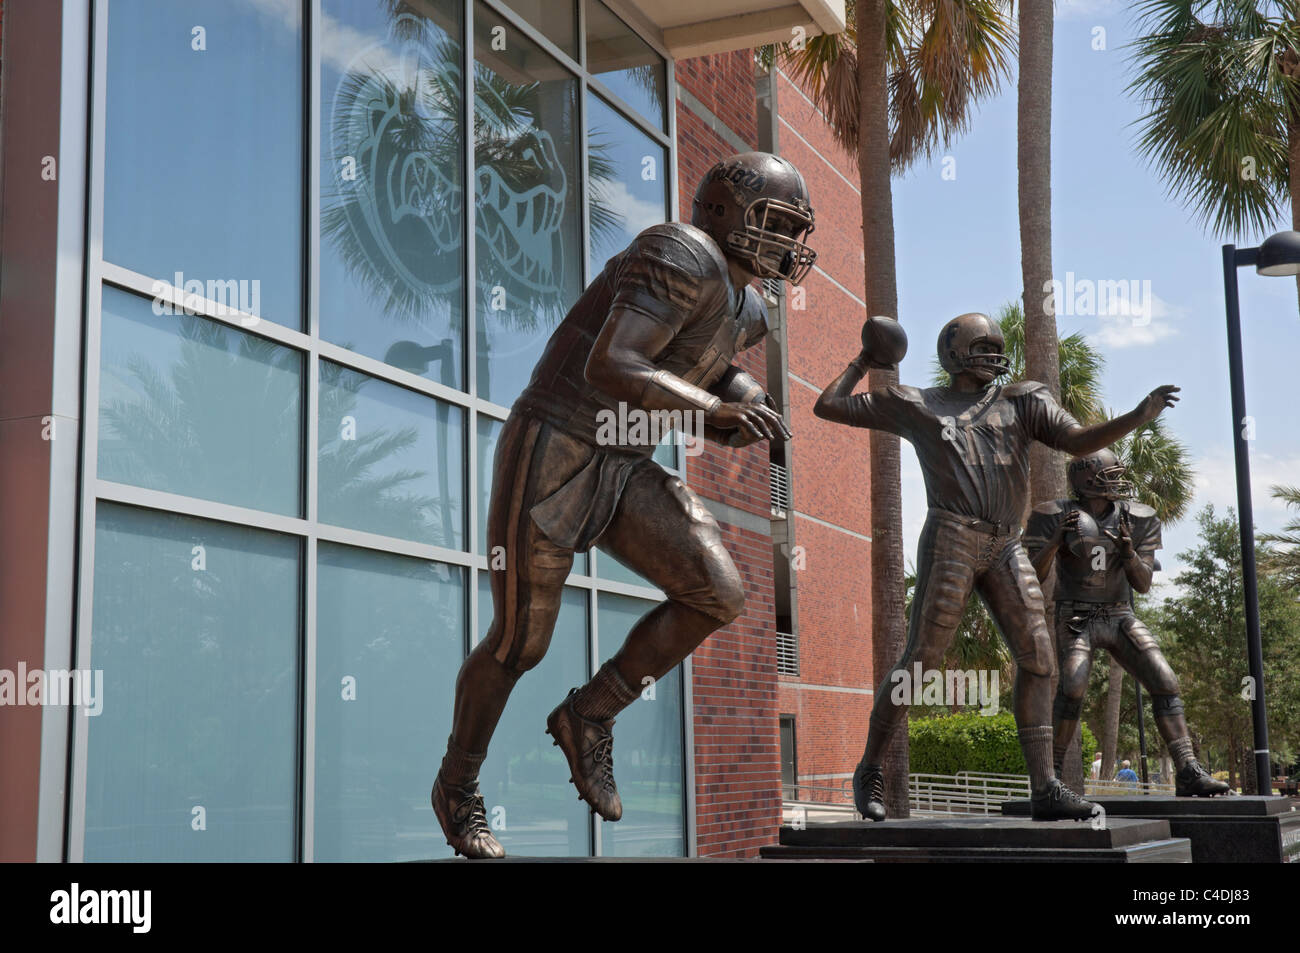 heisman trophy statues winners alamy florida football university